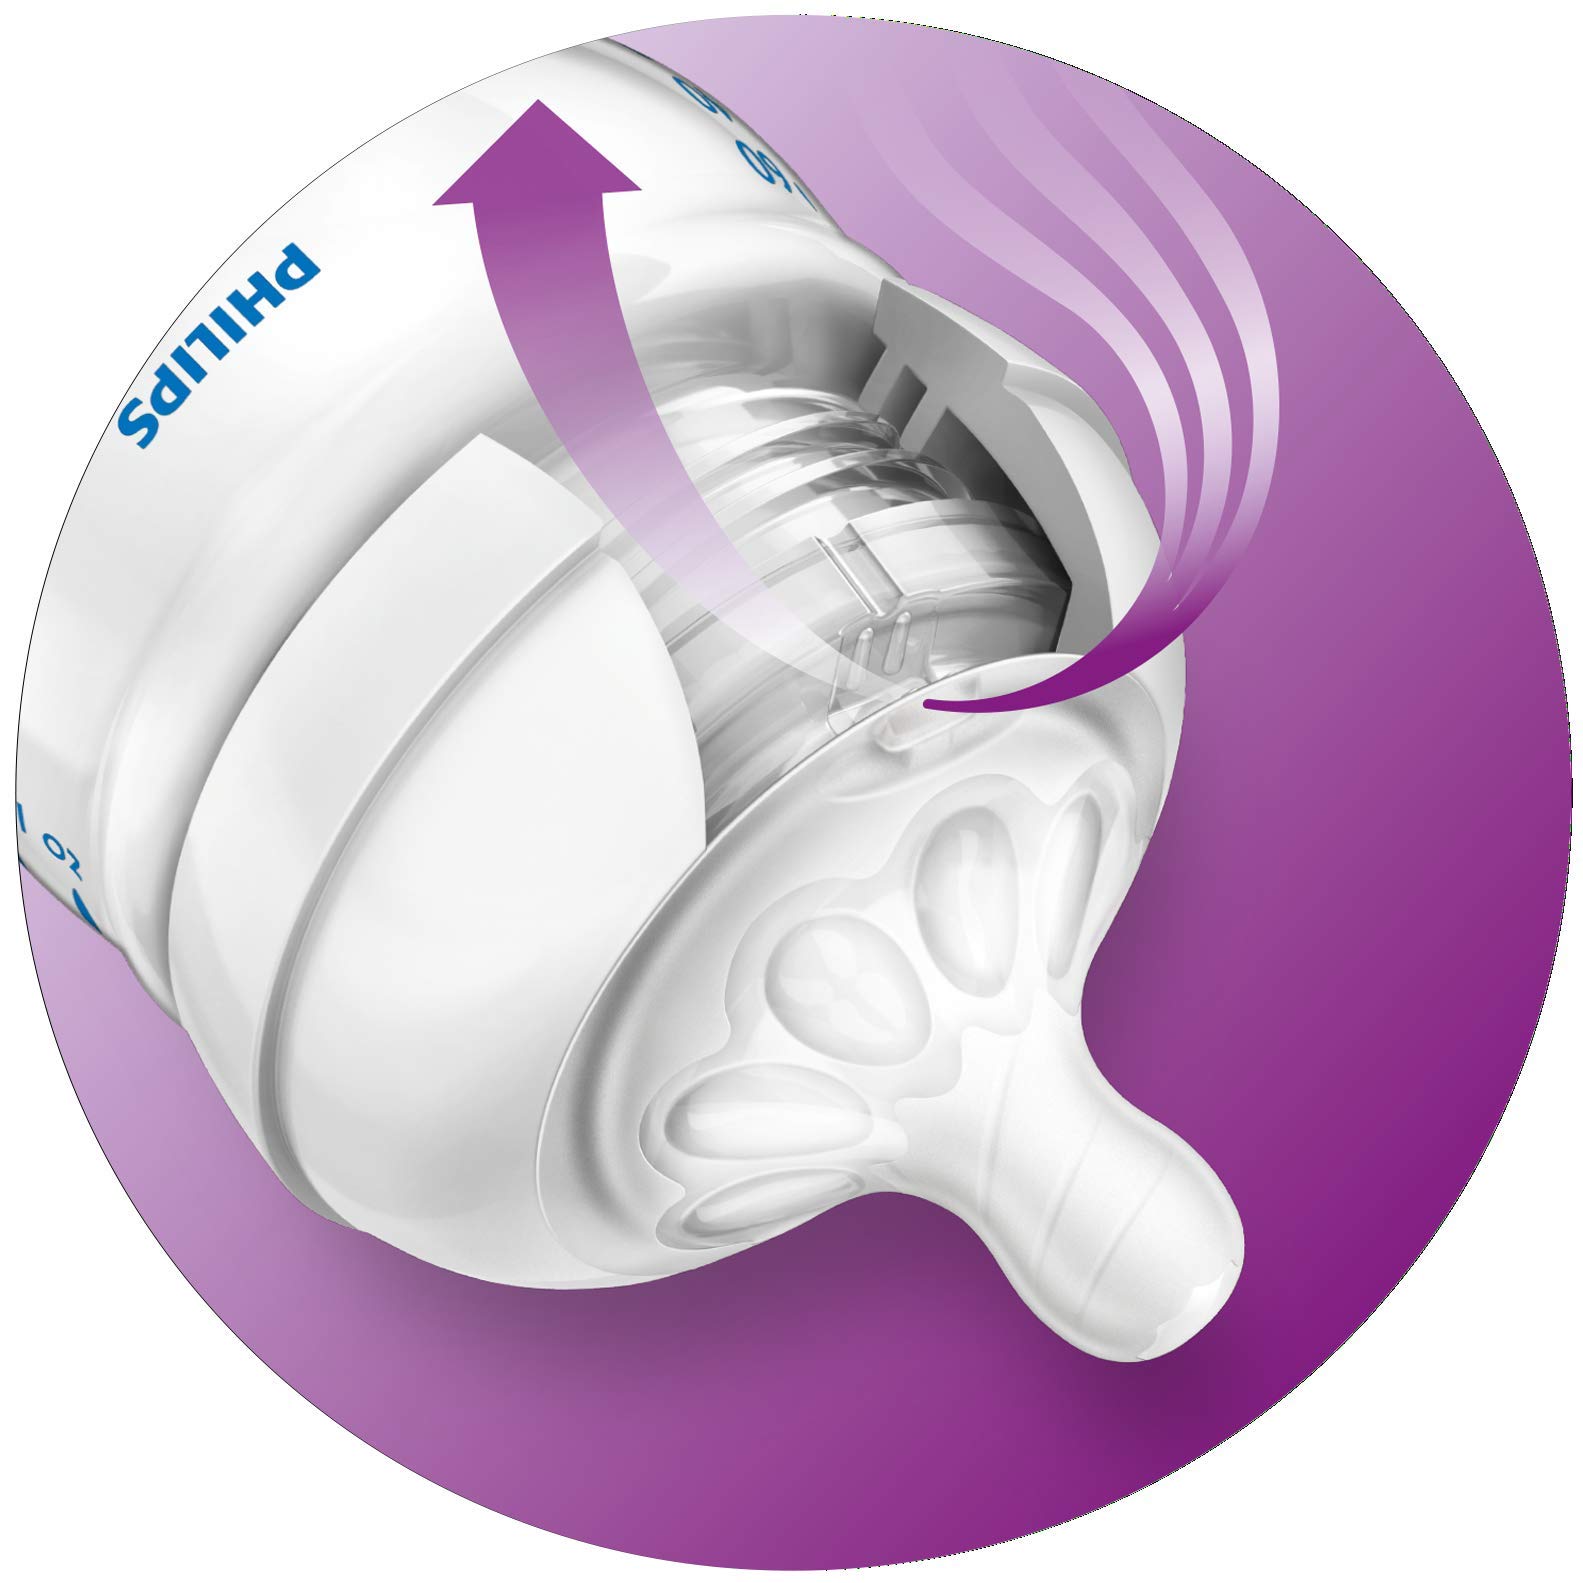 Philips Avent Natural Baby Bottle Fast Flow Nipple, 6M+, Flow 4, SCF654/43, (Pack of 4)